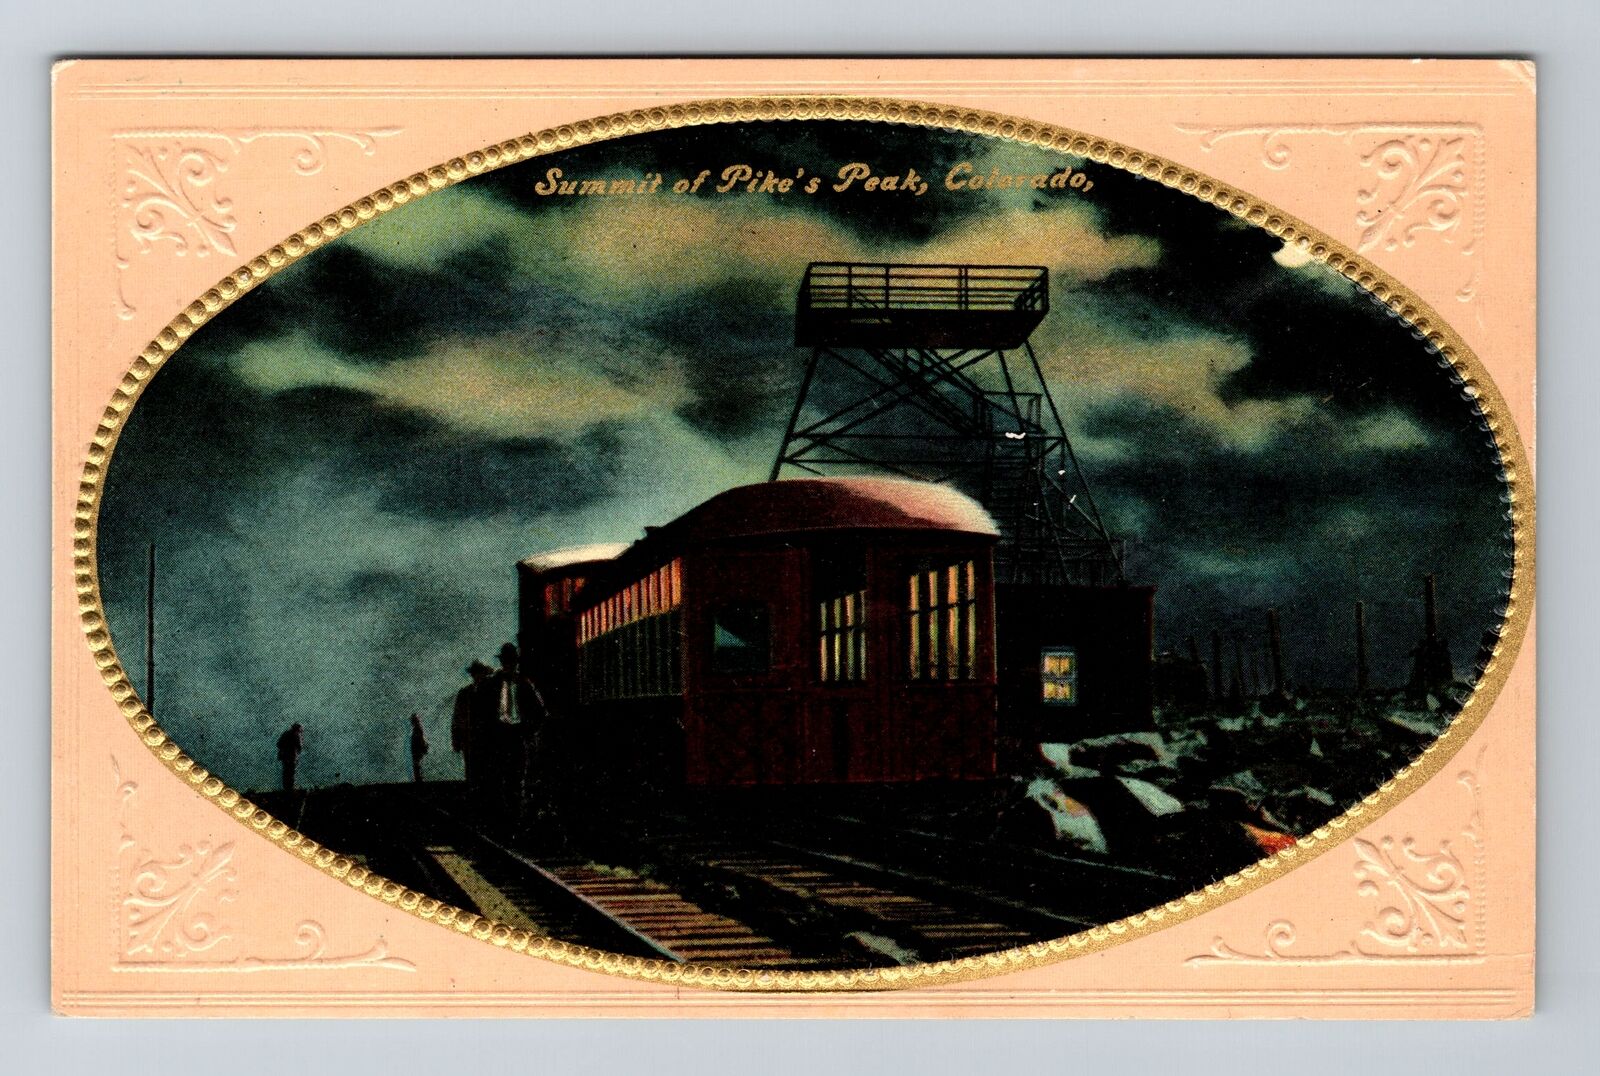 Pike's Peak CO-Colorado, Summit of Pike's Peak and Train, Vintage Postcard